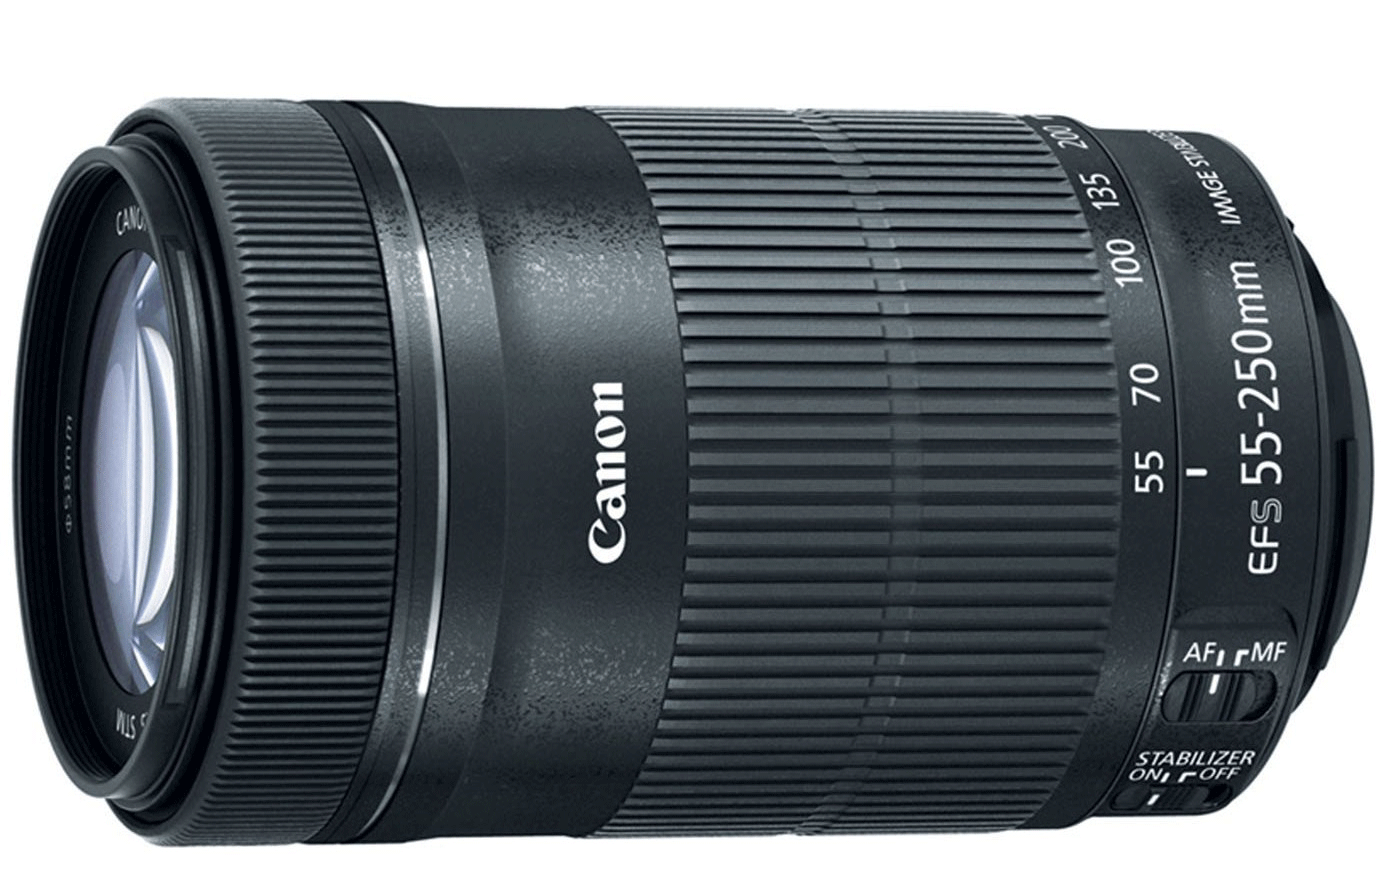 Hot Deal: New Canon EF-S 55-250mm F4-5.6 IS STM Lens for $119.20 - Lens